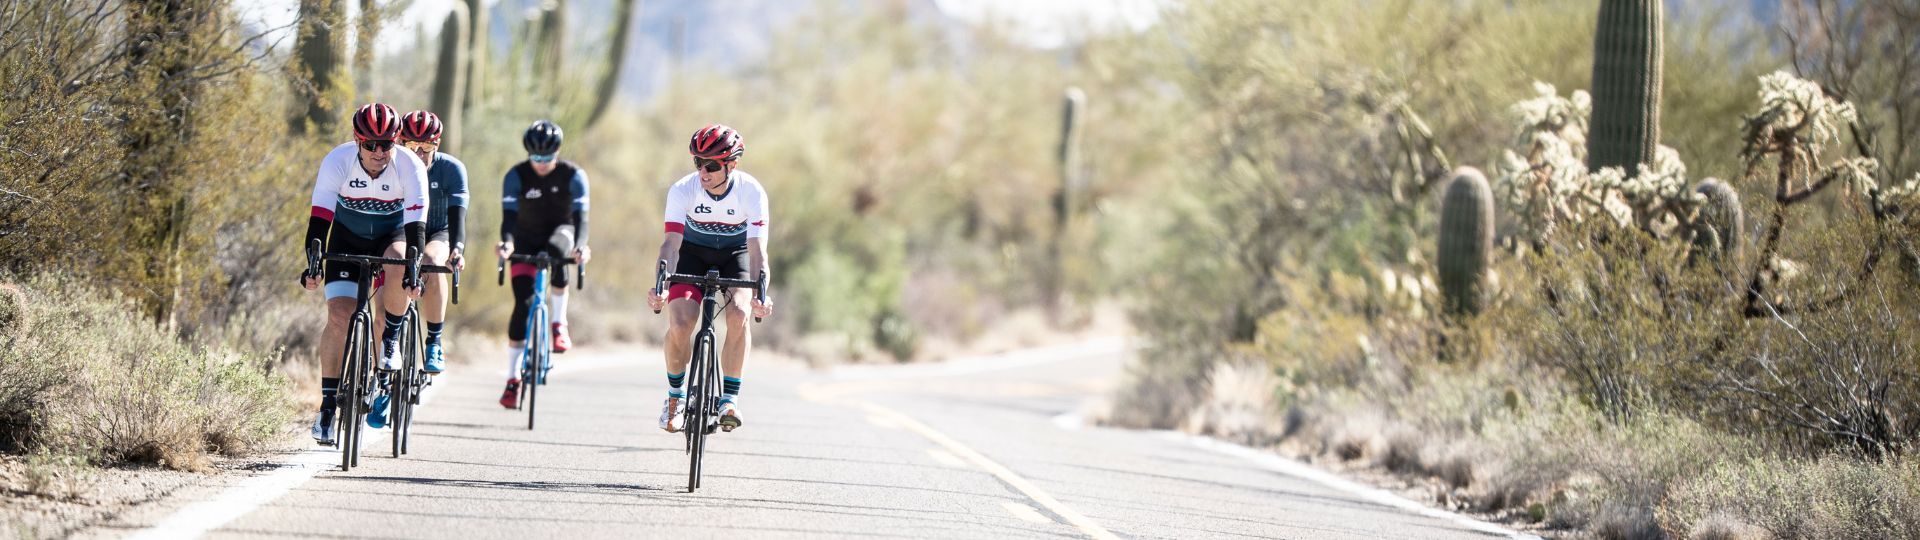 cycling spring training camp Tucson Arizona